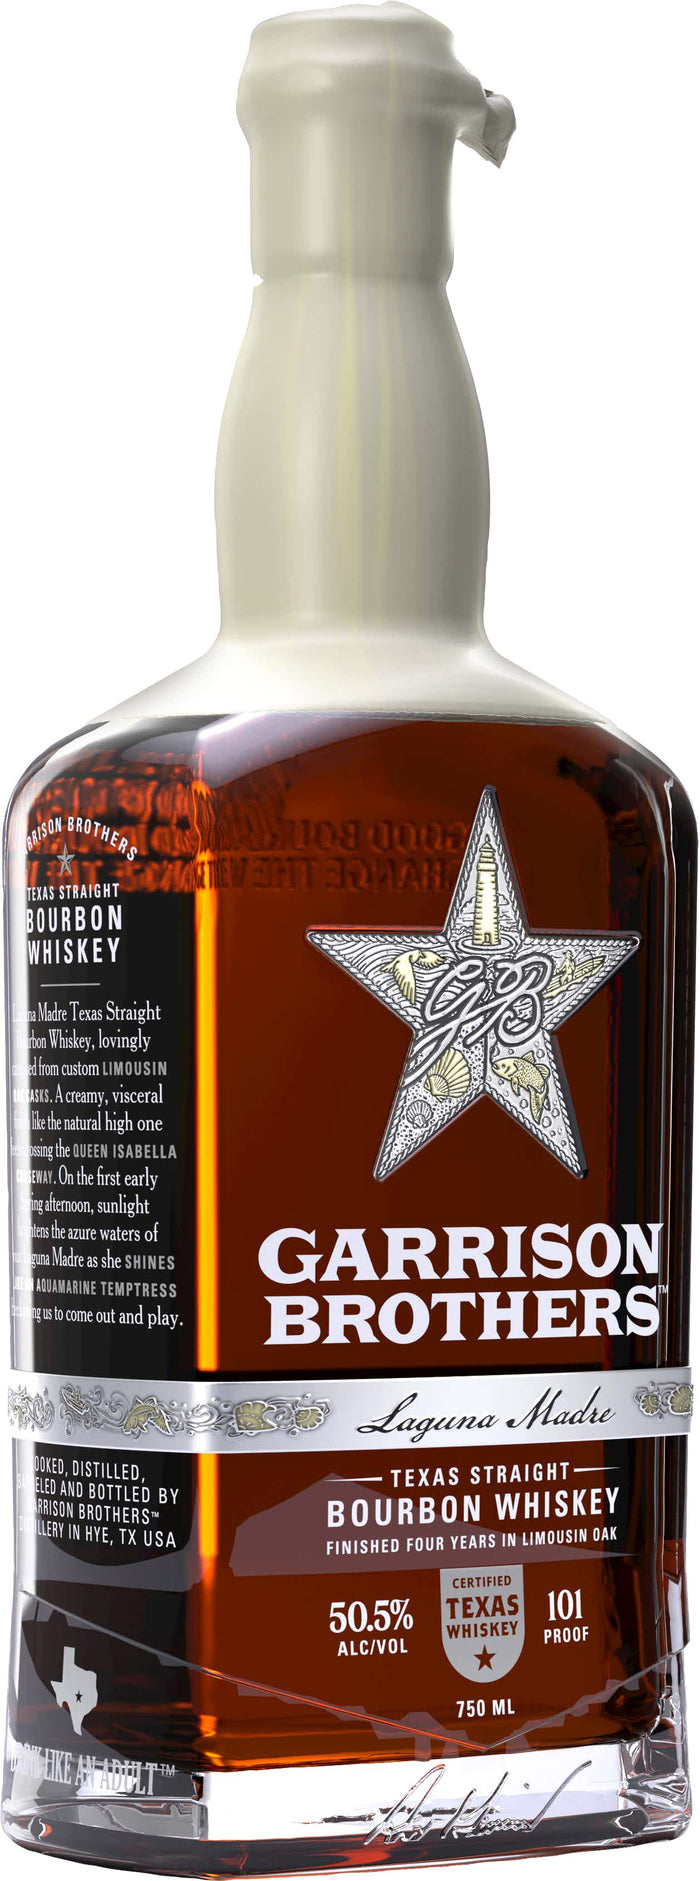 Garrison Brothers Laguna Madre 8 Year old Texas Straight Bourbon Whiskey